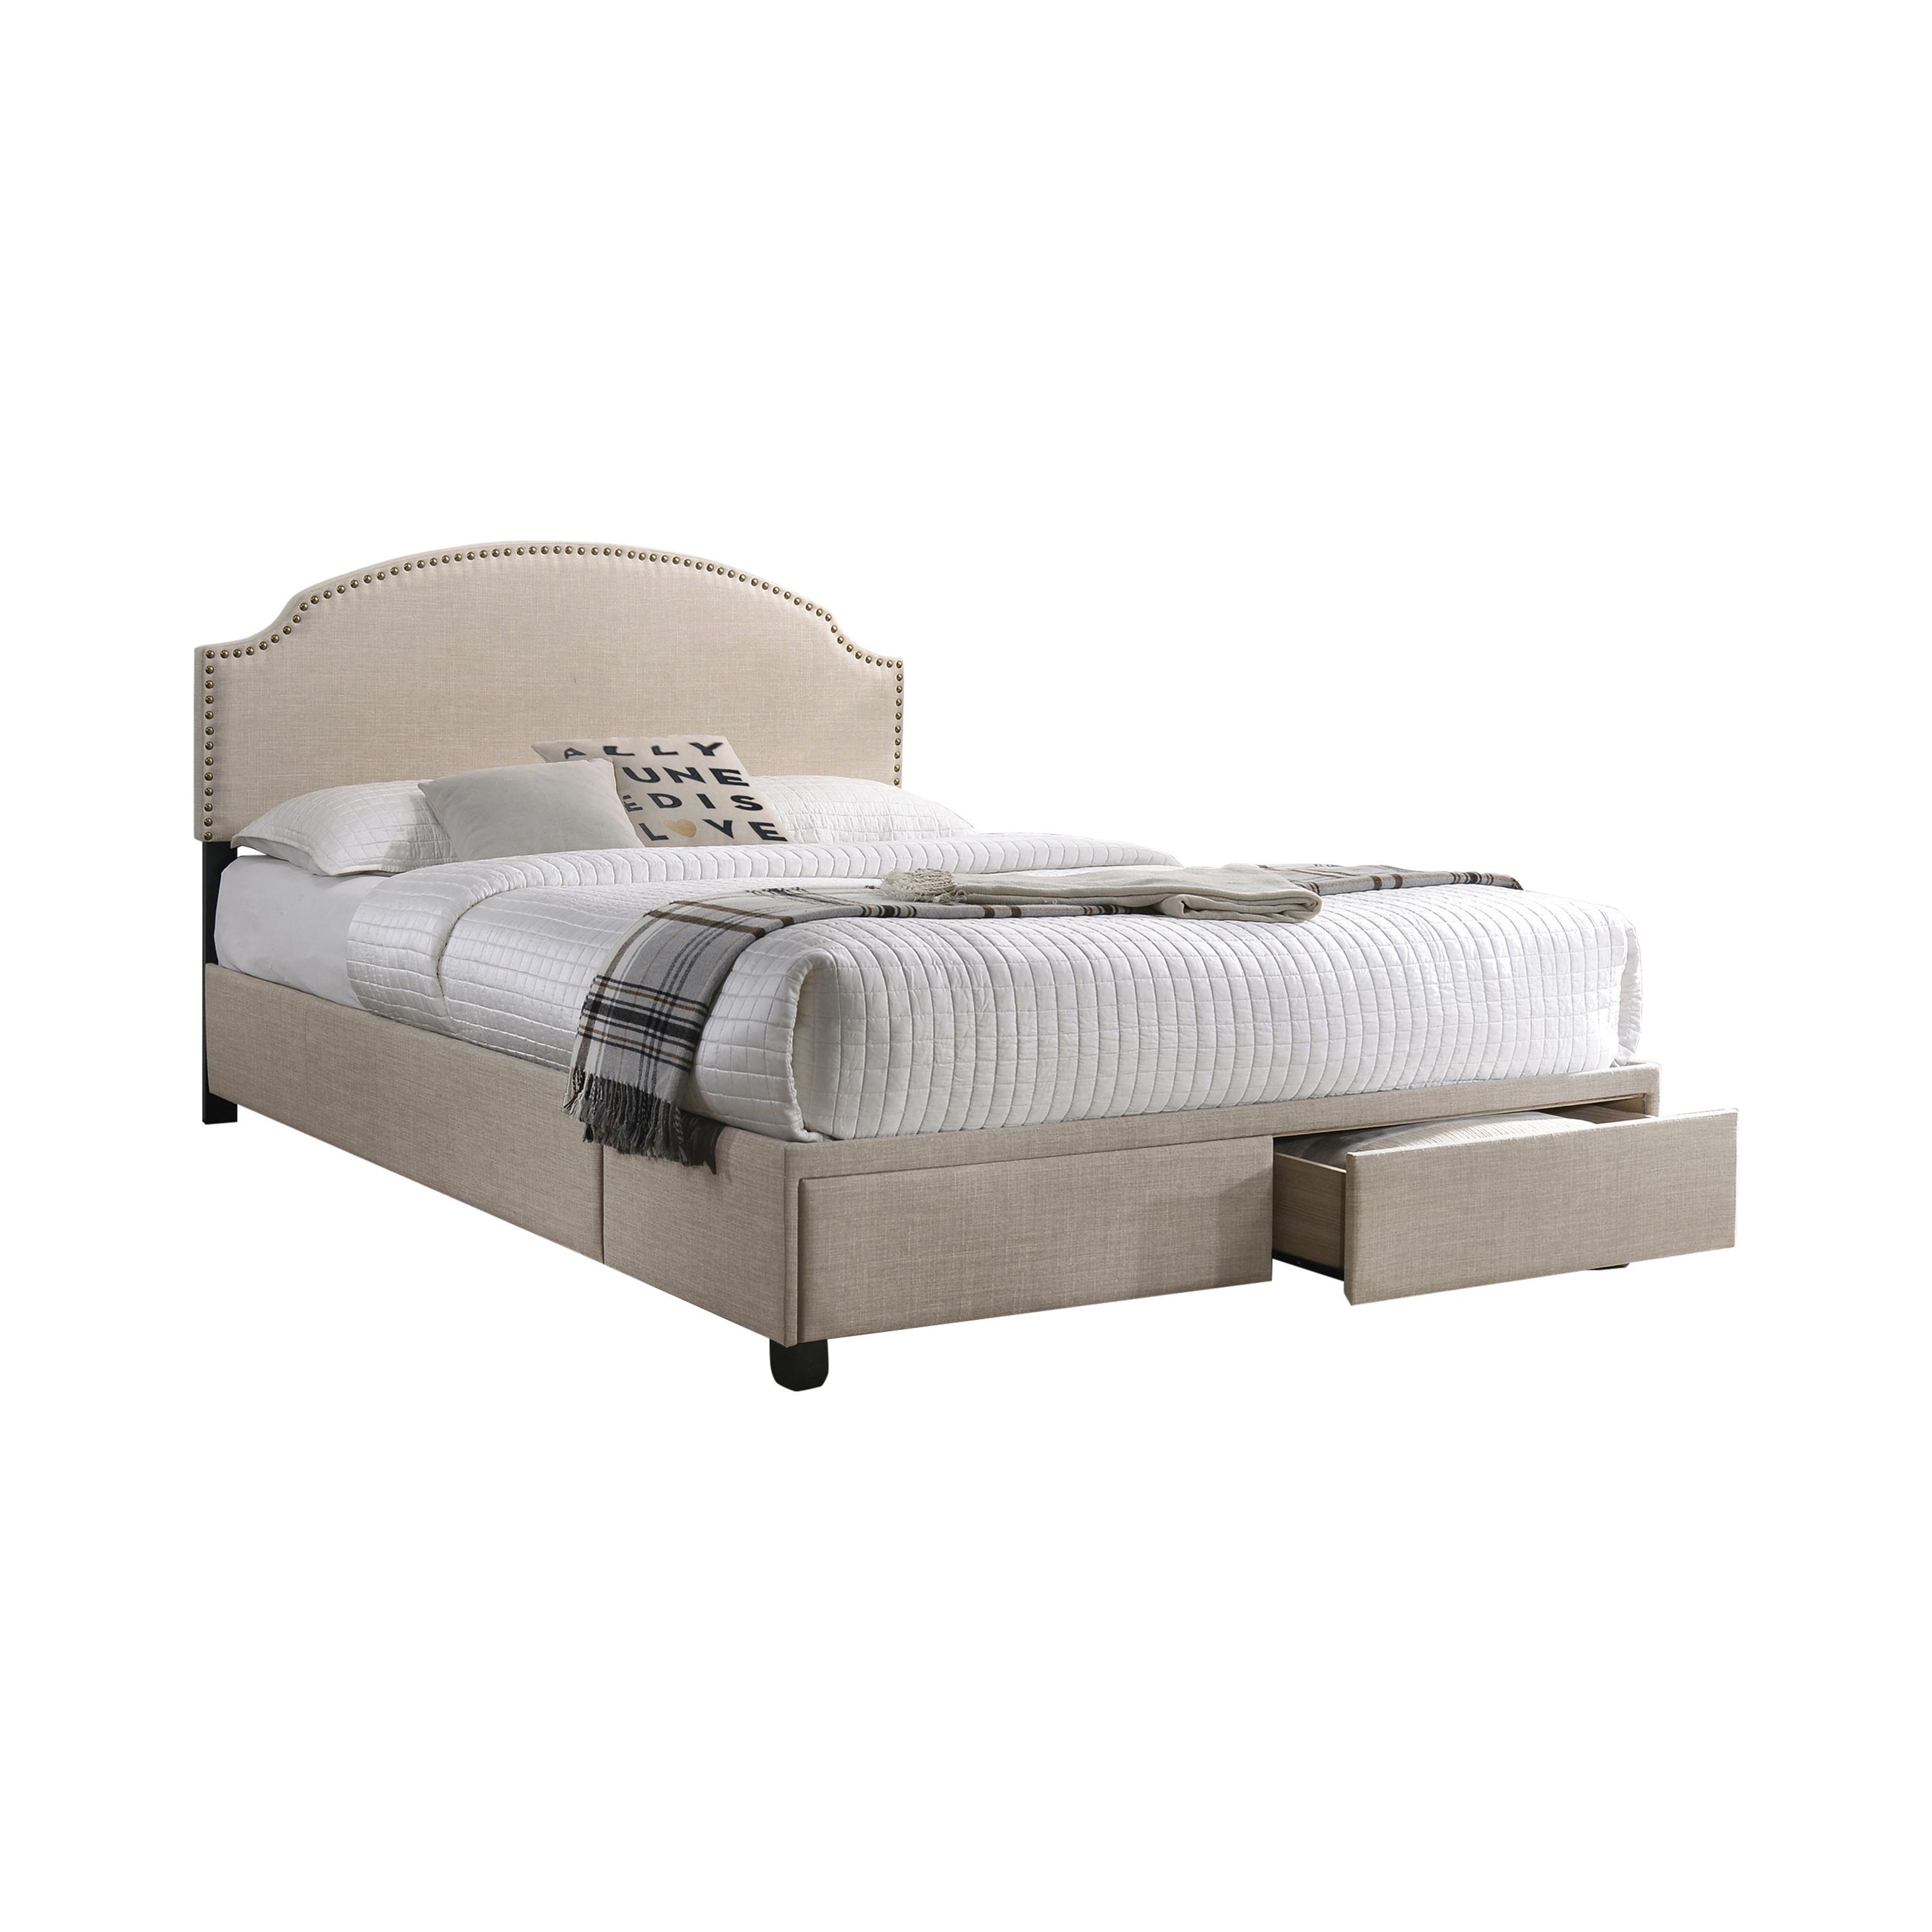 Modern Bed 305896F Newdale 305896F in Beige Fabric